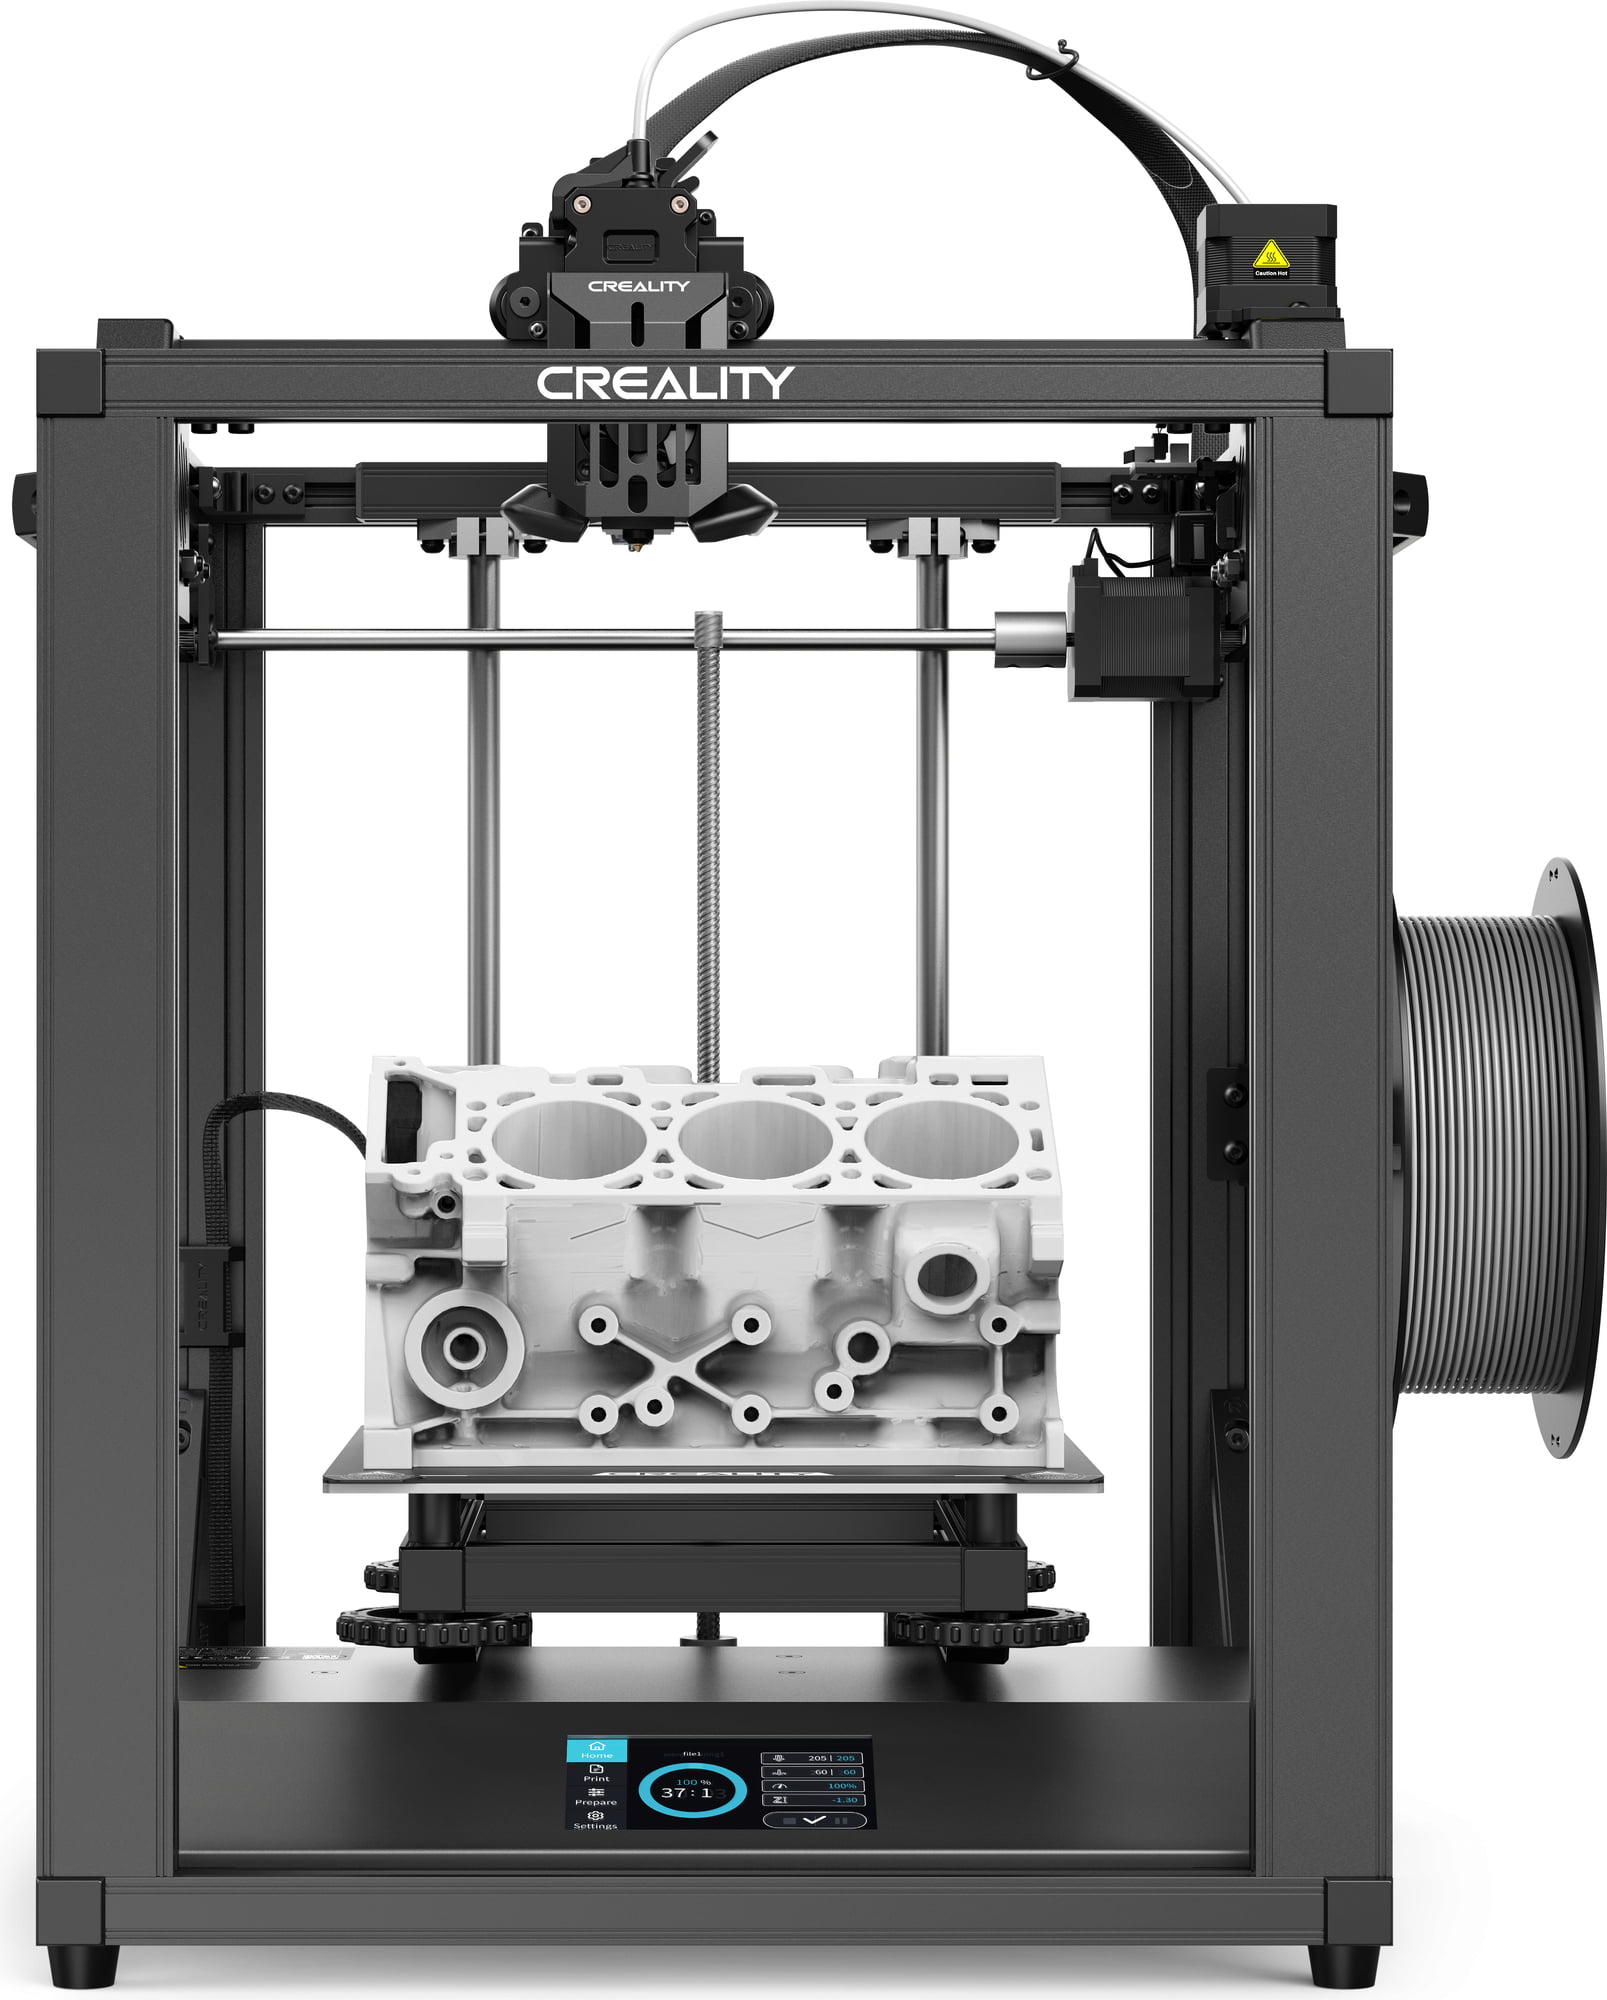 CREALITY Ender 5 S1 3D Printer FDM